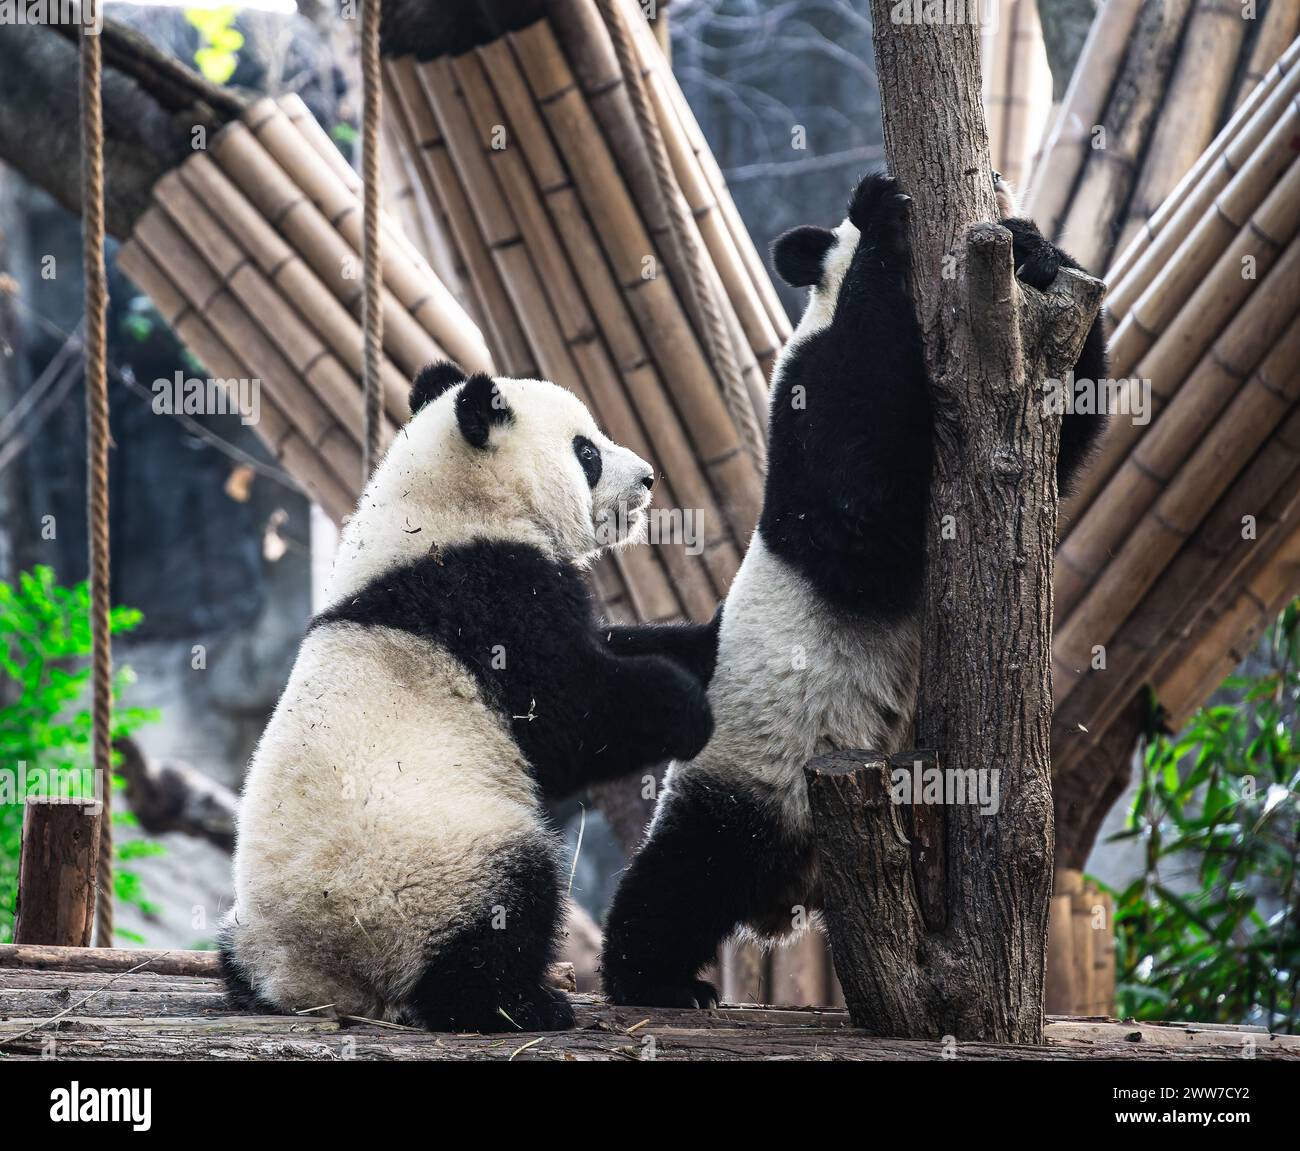 Giant Pandas in Chengdu, China Stock Photo